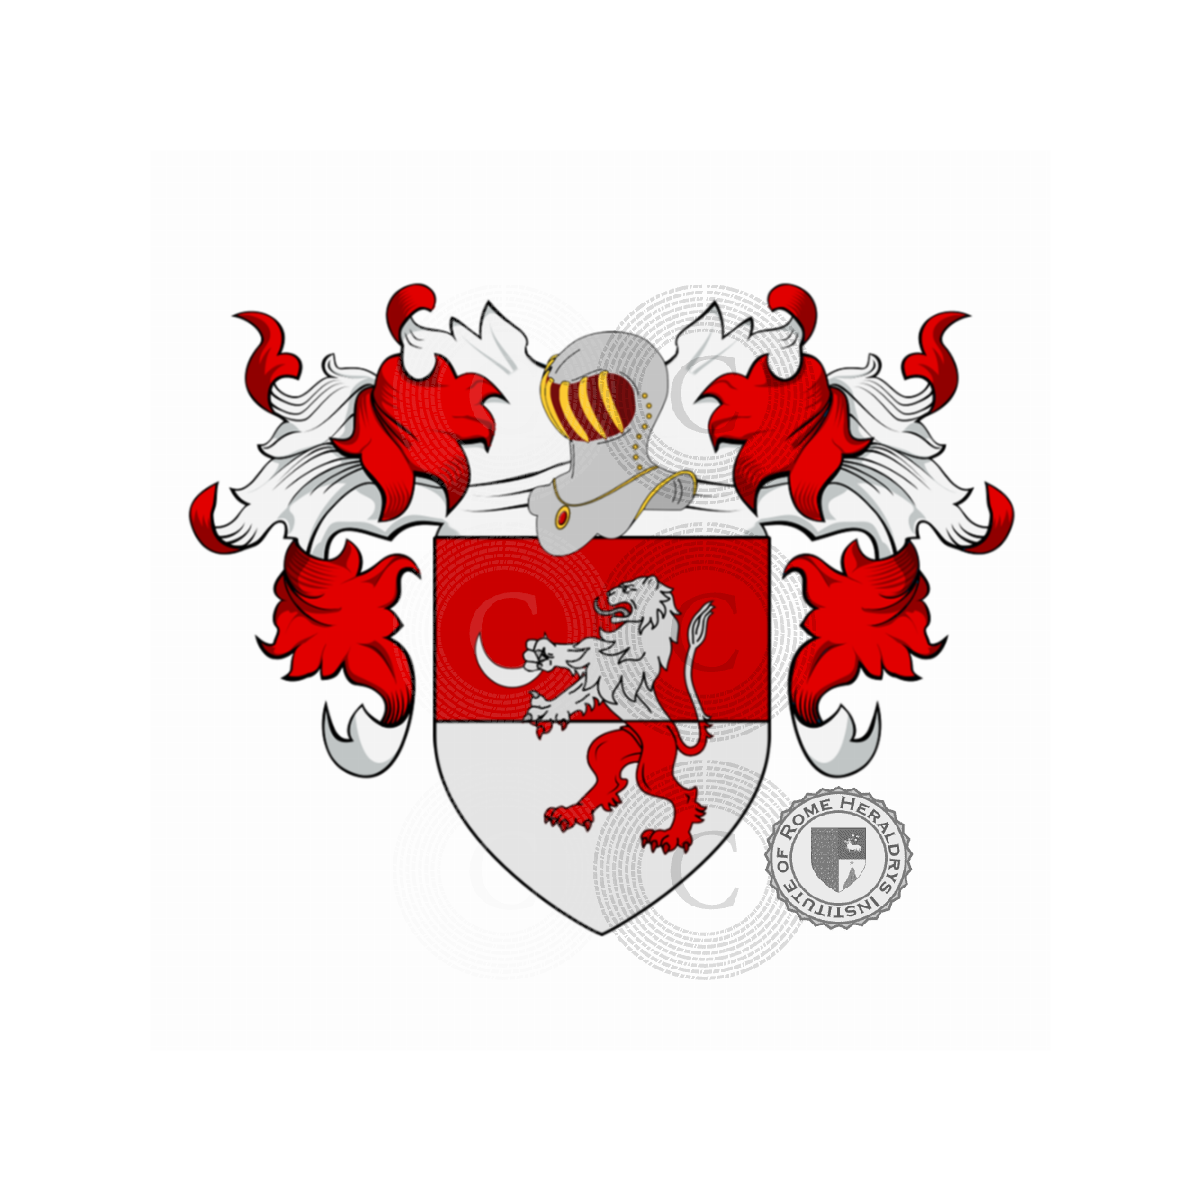 Wappen der FamiliePratesi del Lion Nero, Pratesi del Lion Nero